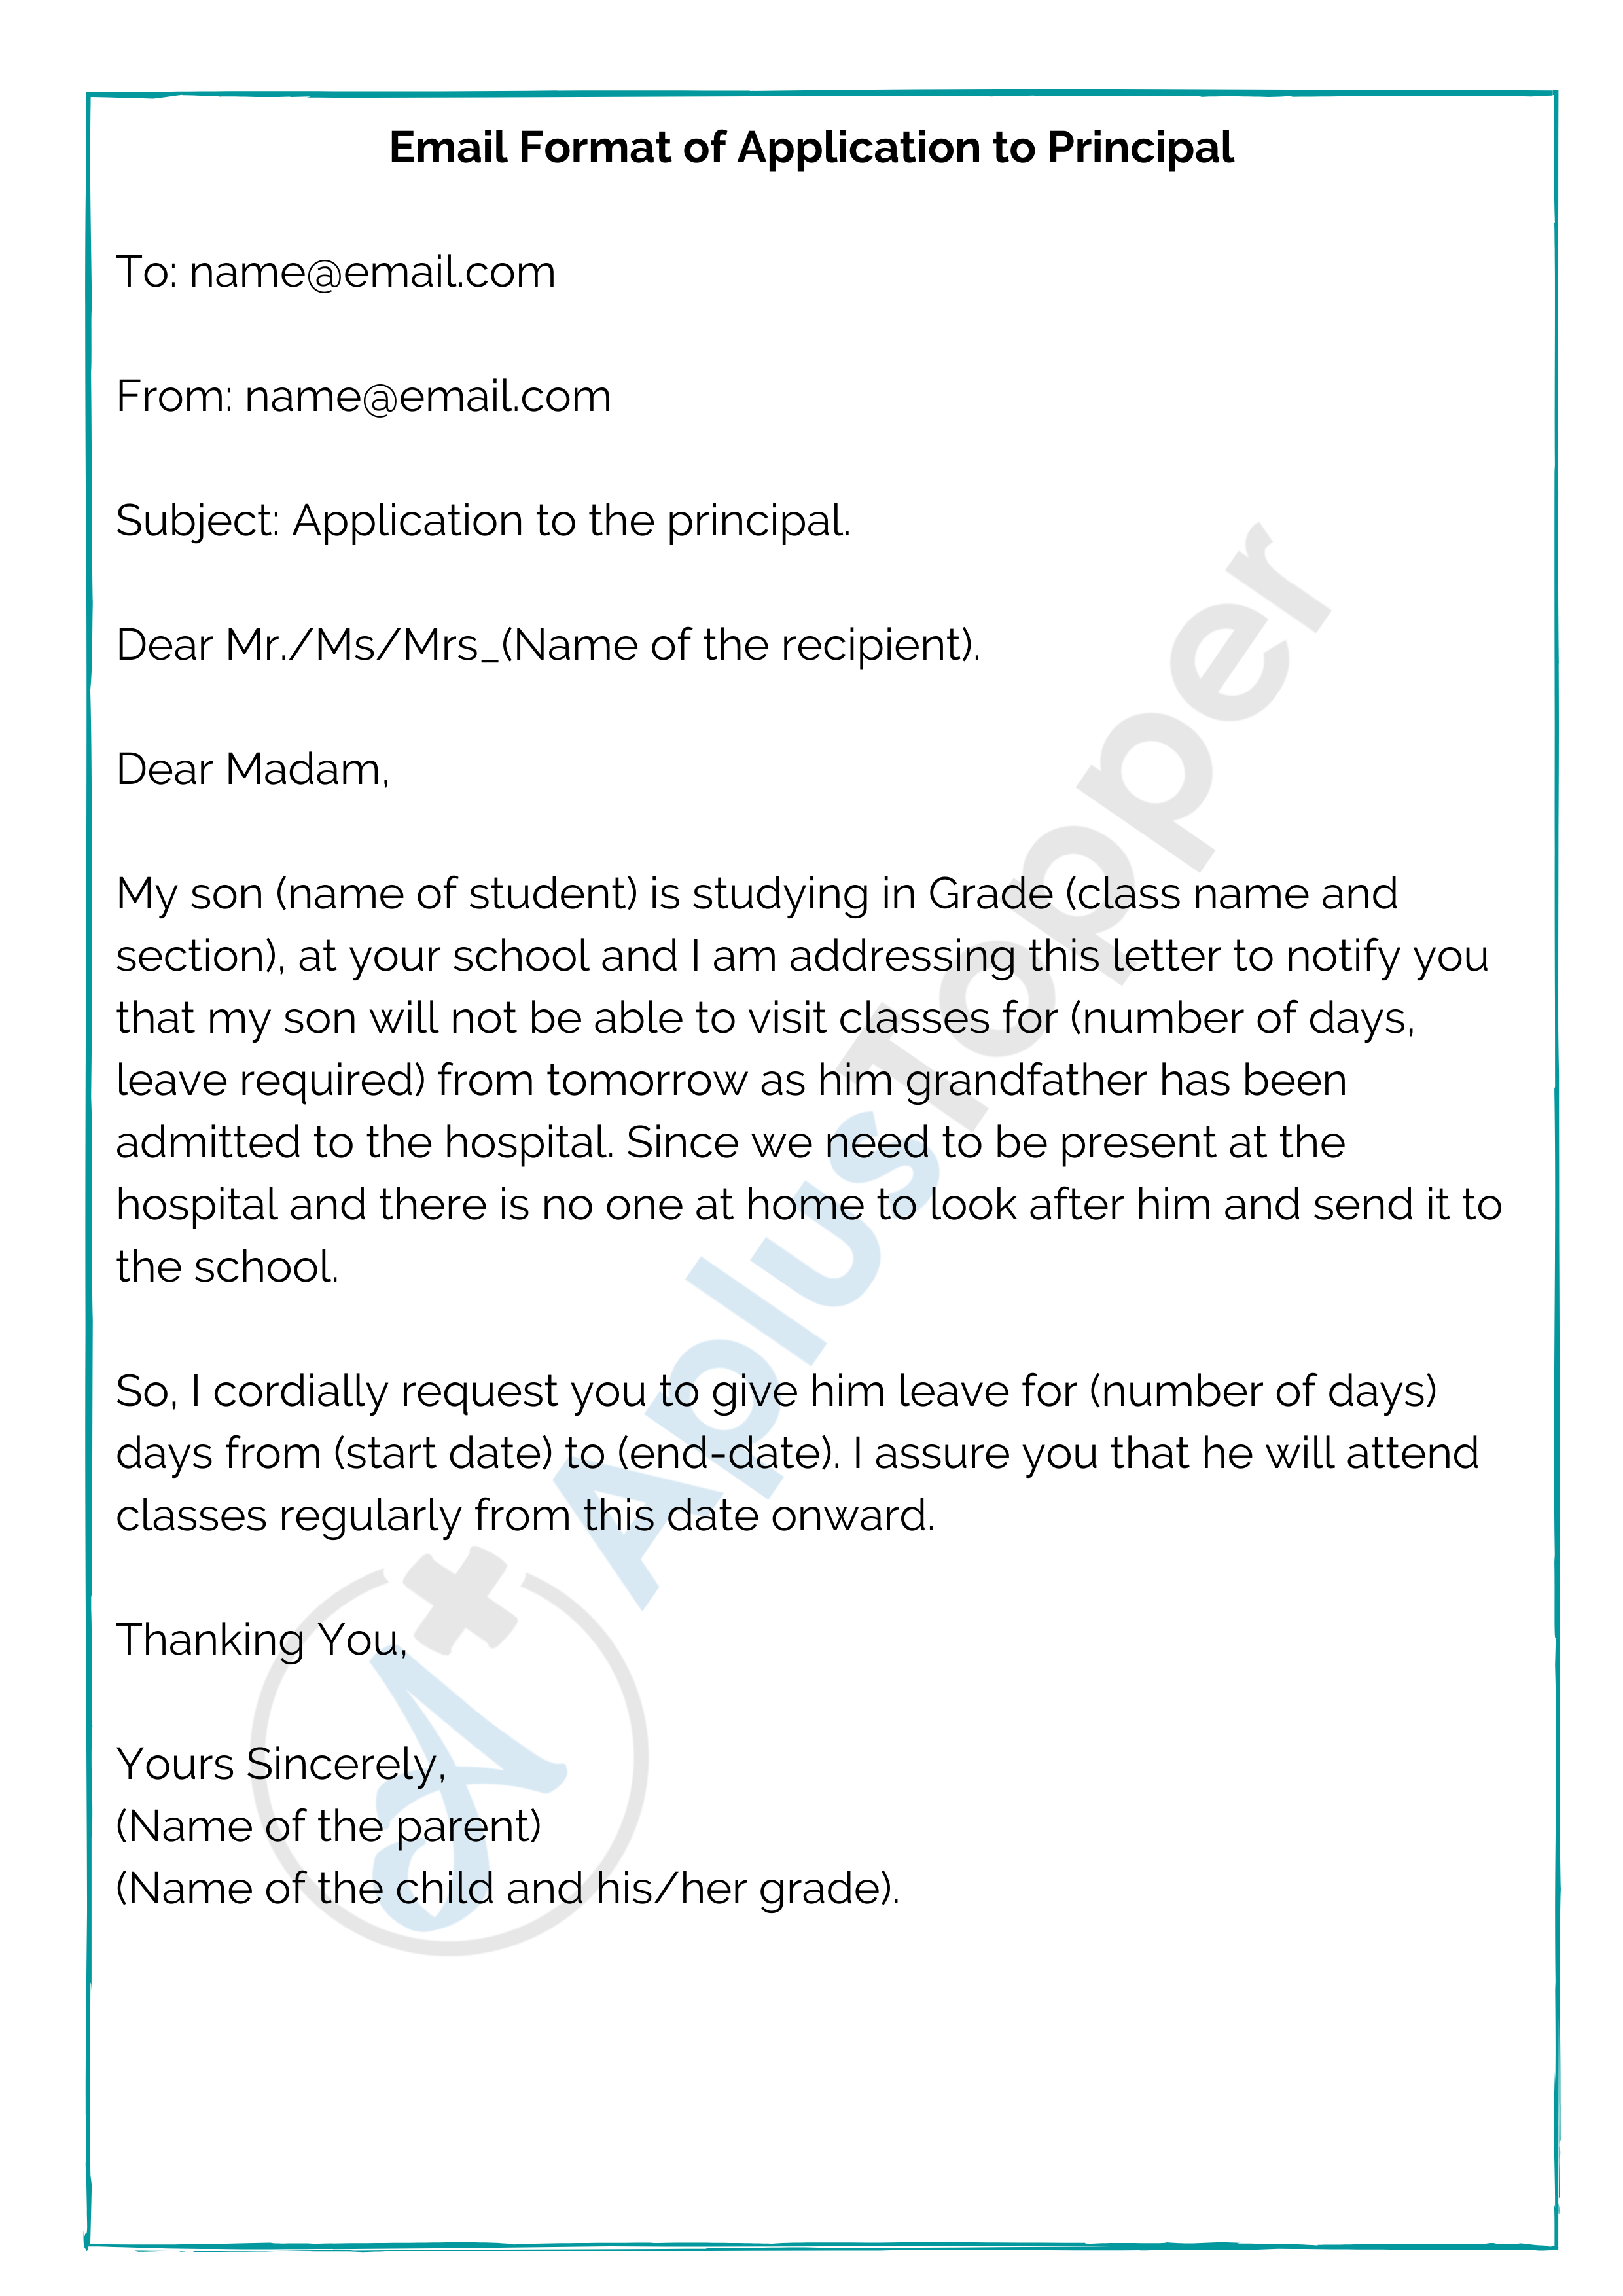 job application letter for principal